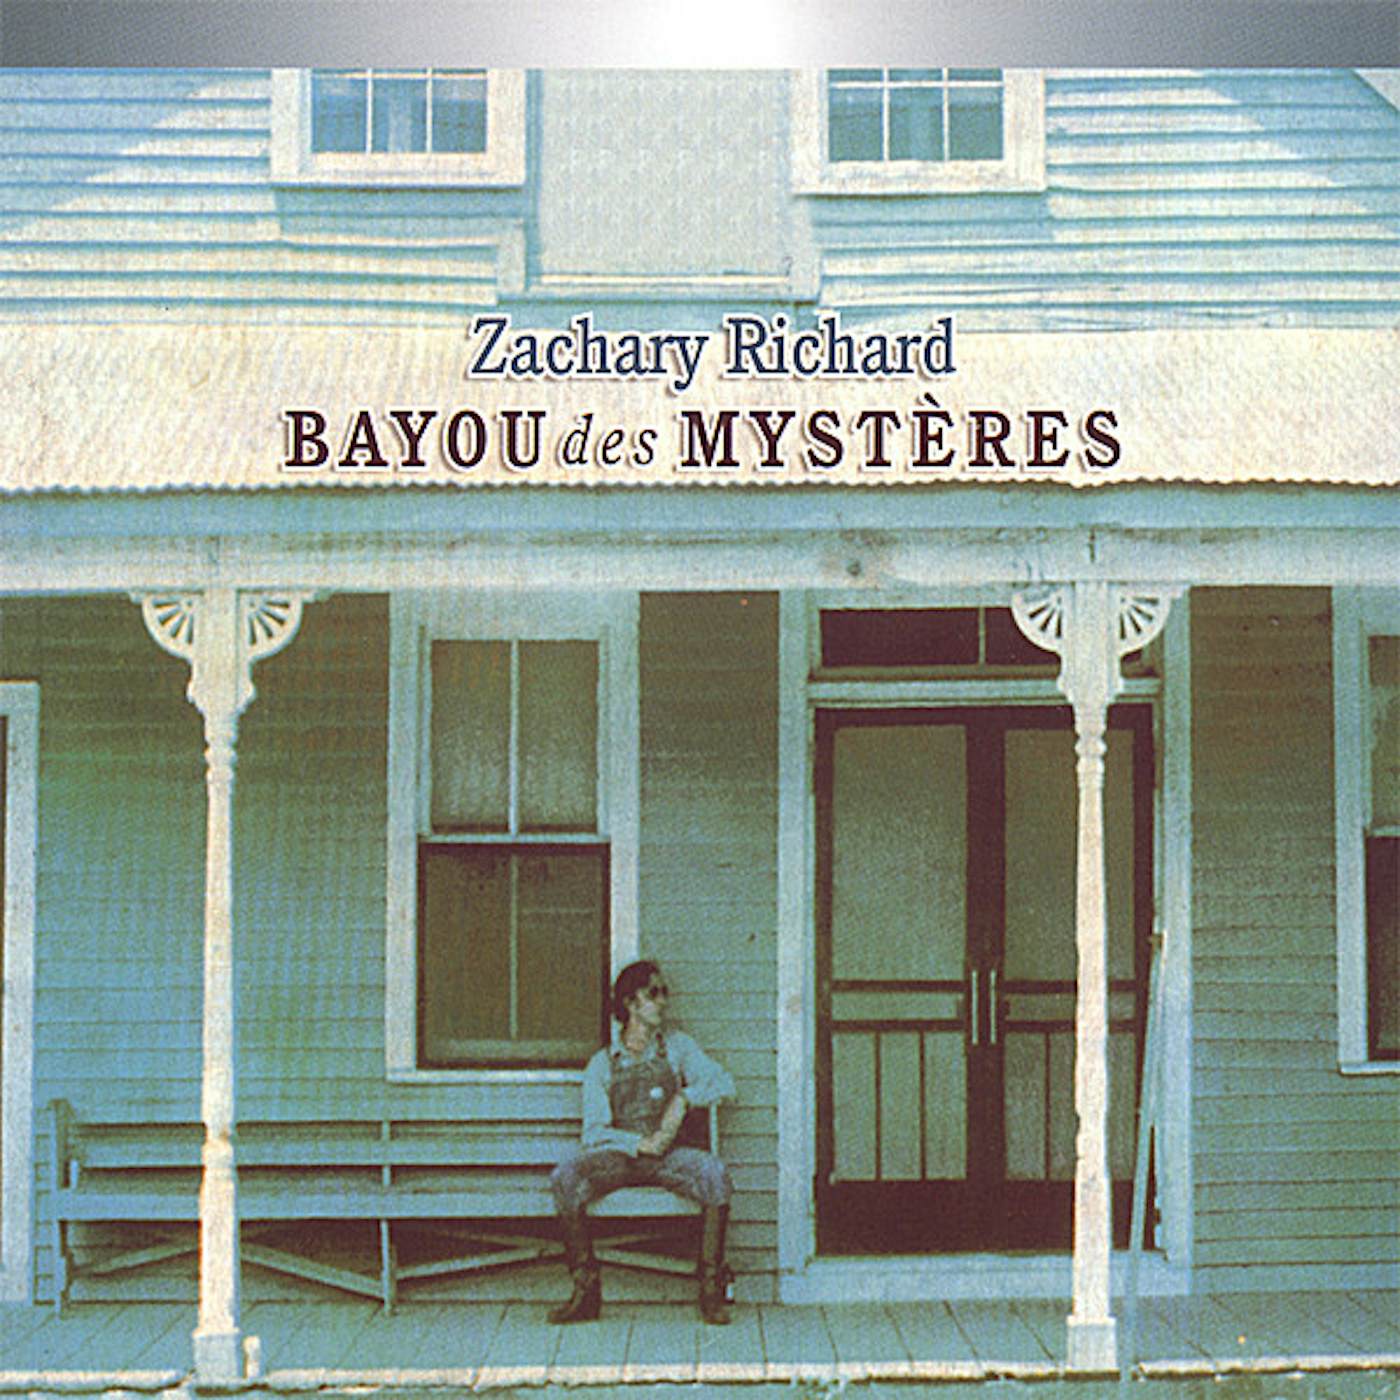 Zachary Richard BAYOU DES MYSTERES CD